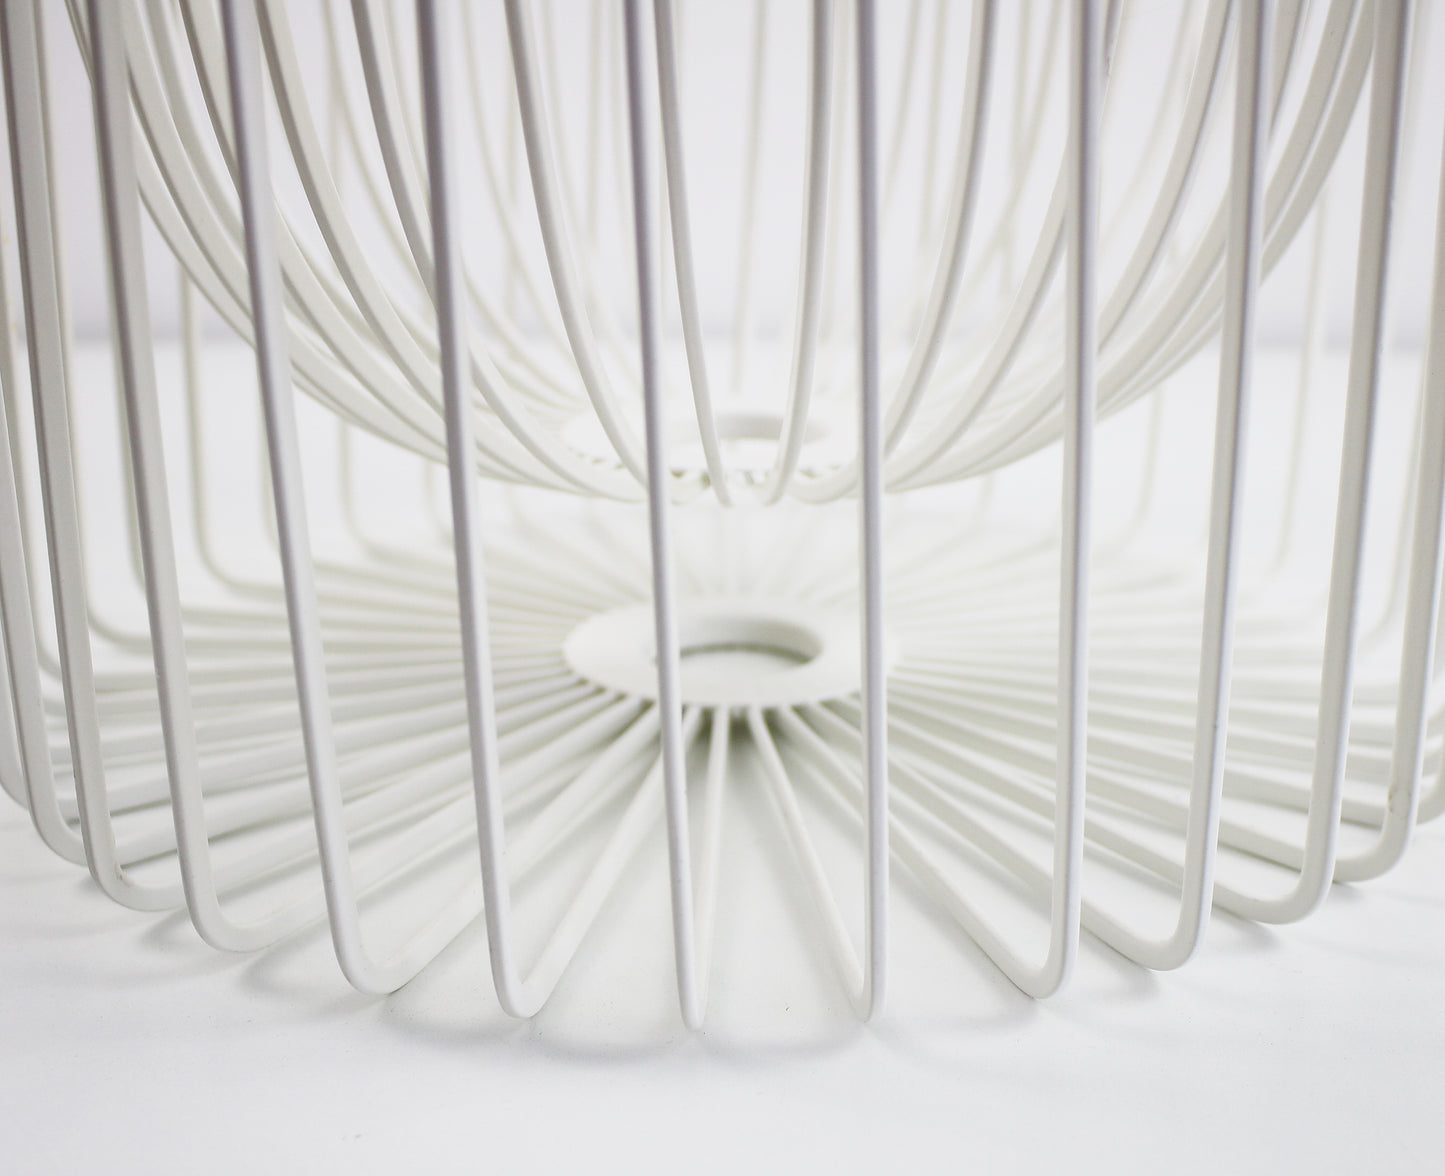 Retired Tradig white wire fruit bowl by Ehlen Johansson for IKEA PS range